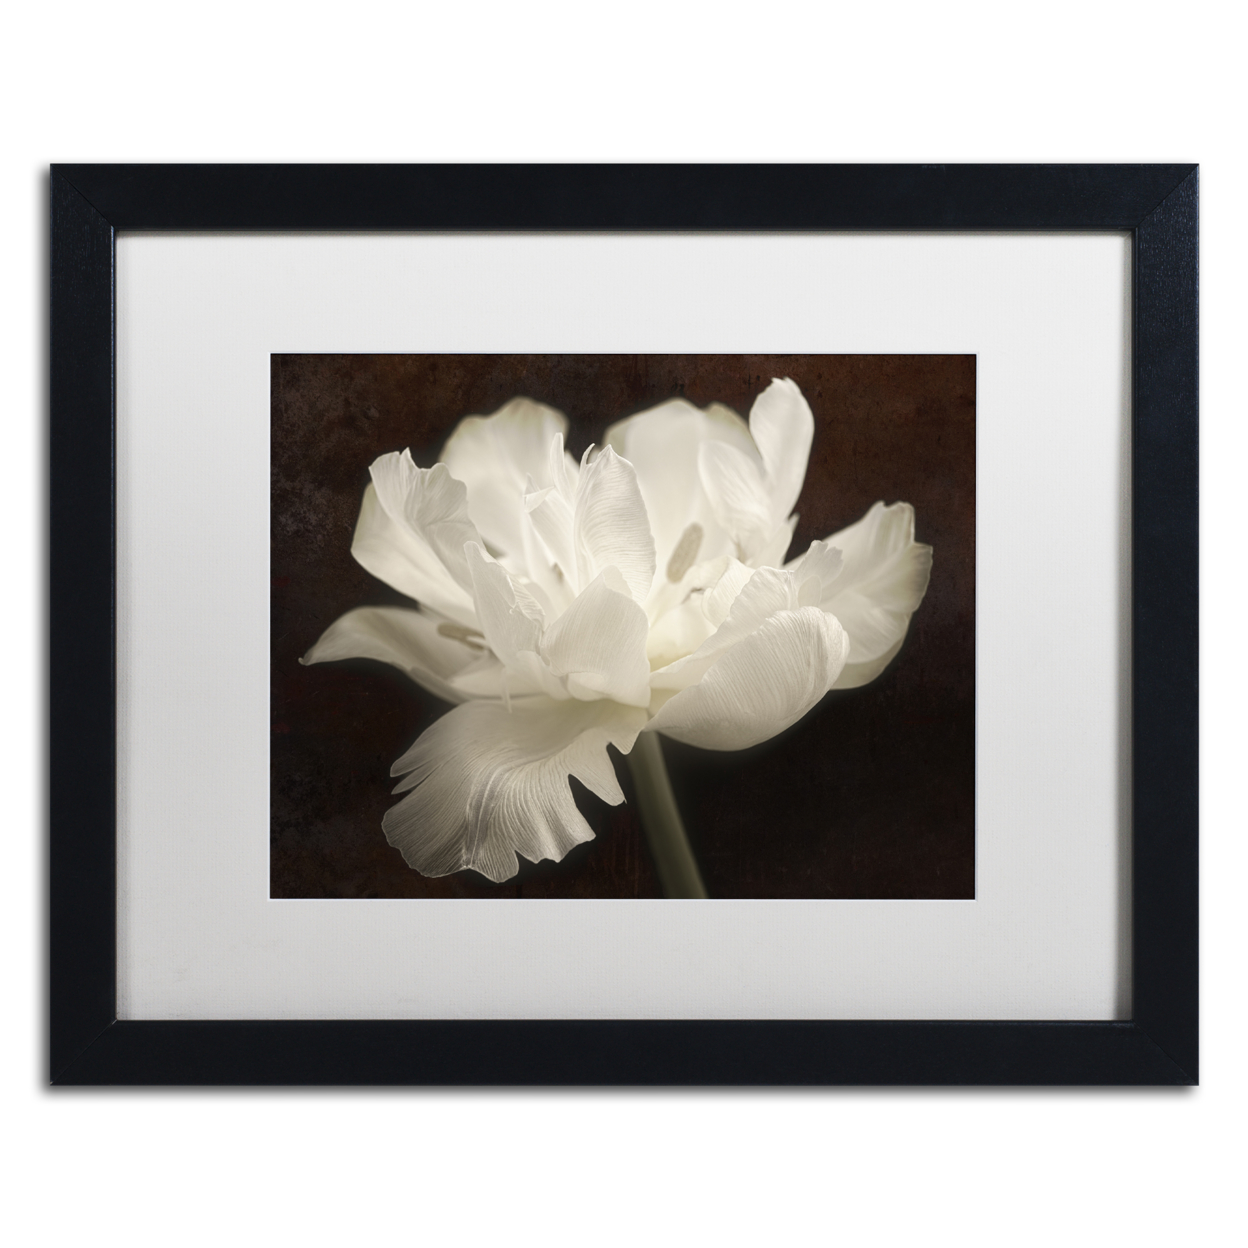 Cora Niele 'White Tulip II' Black Wooden Framed Art 18 X 22 Inches